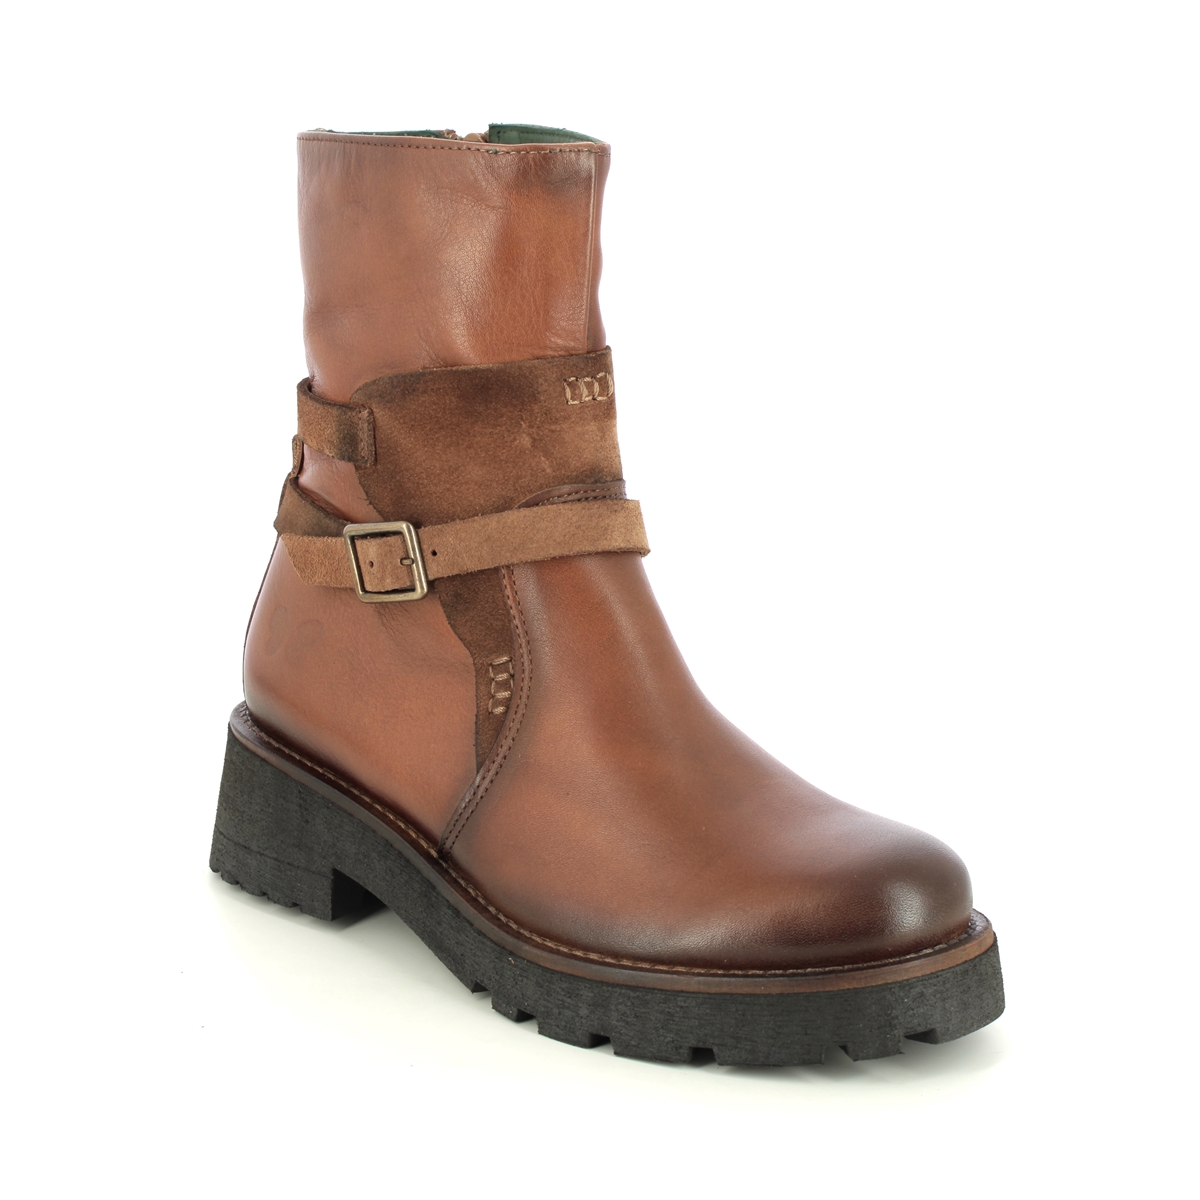 Felmini - Nadir  Strap (Tan Leather ) D550-11 In Size 40 In Plain Tan Leather